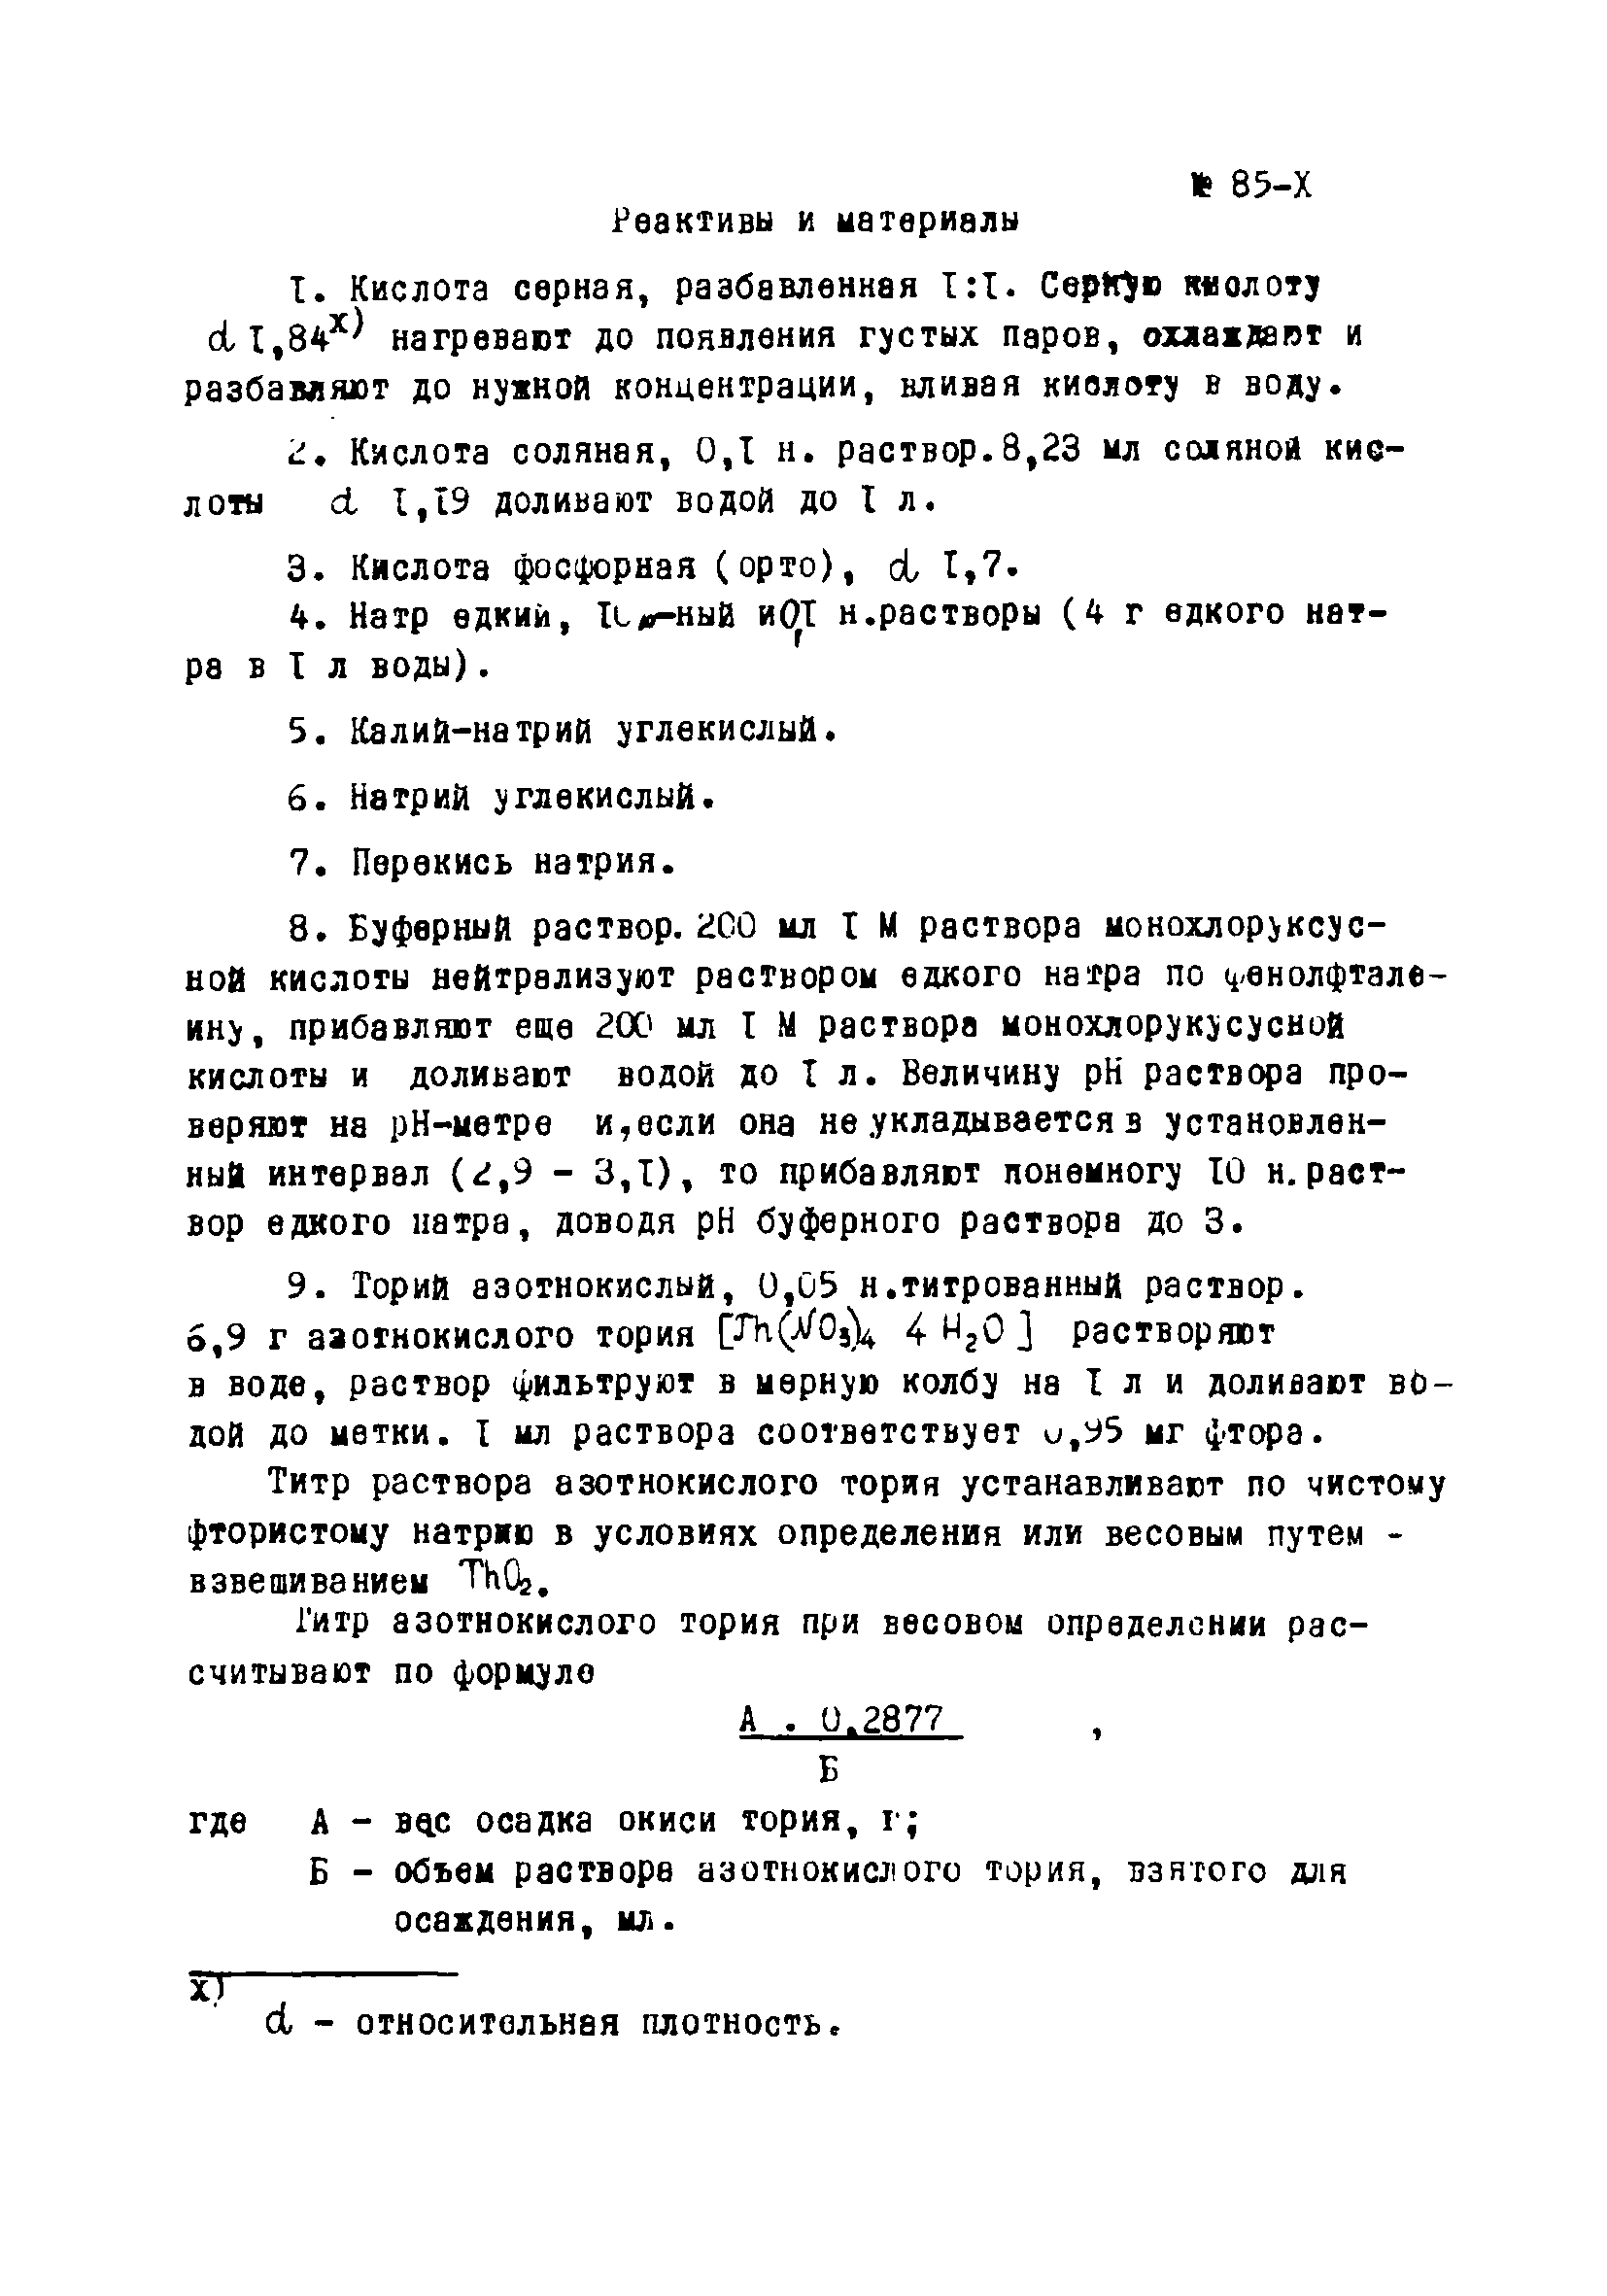 Инструкция НСАМ 85-Х